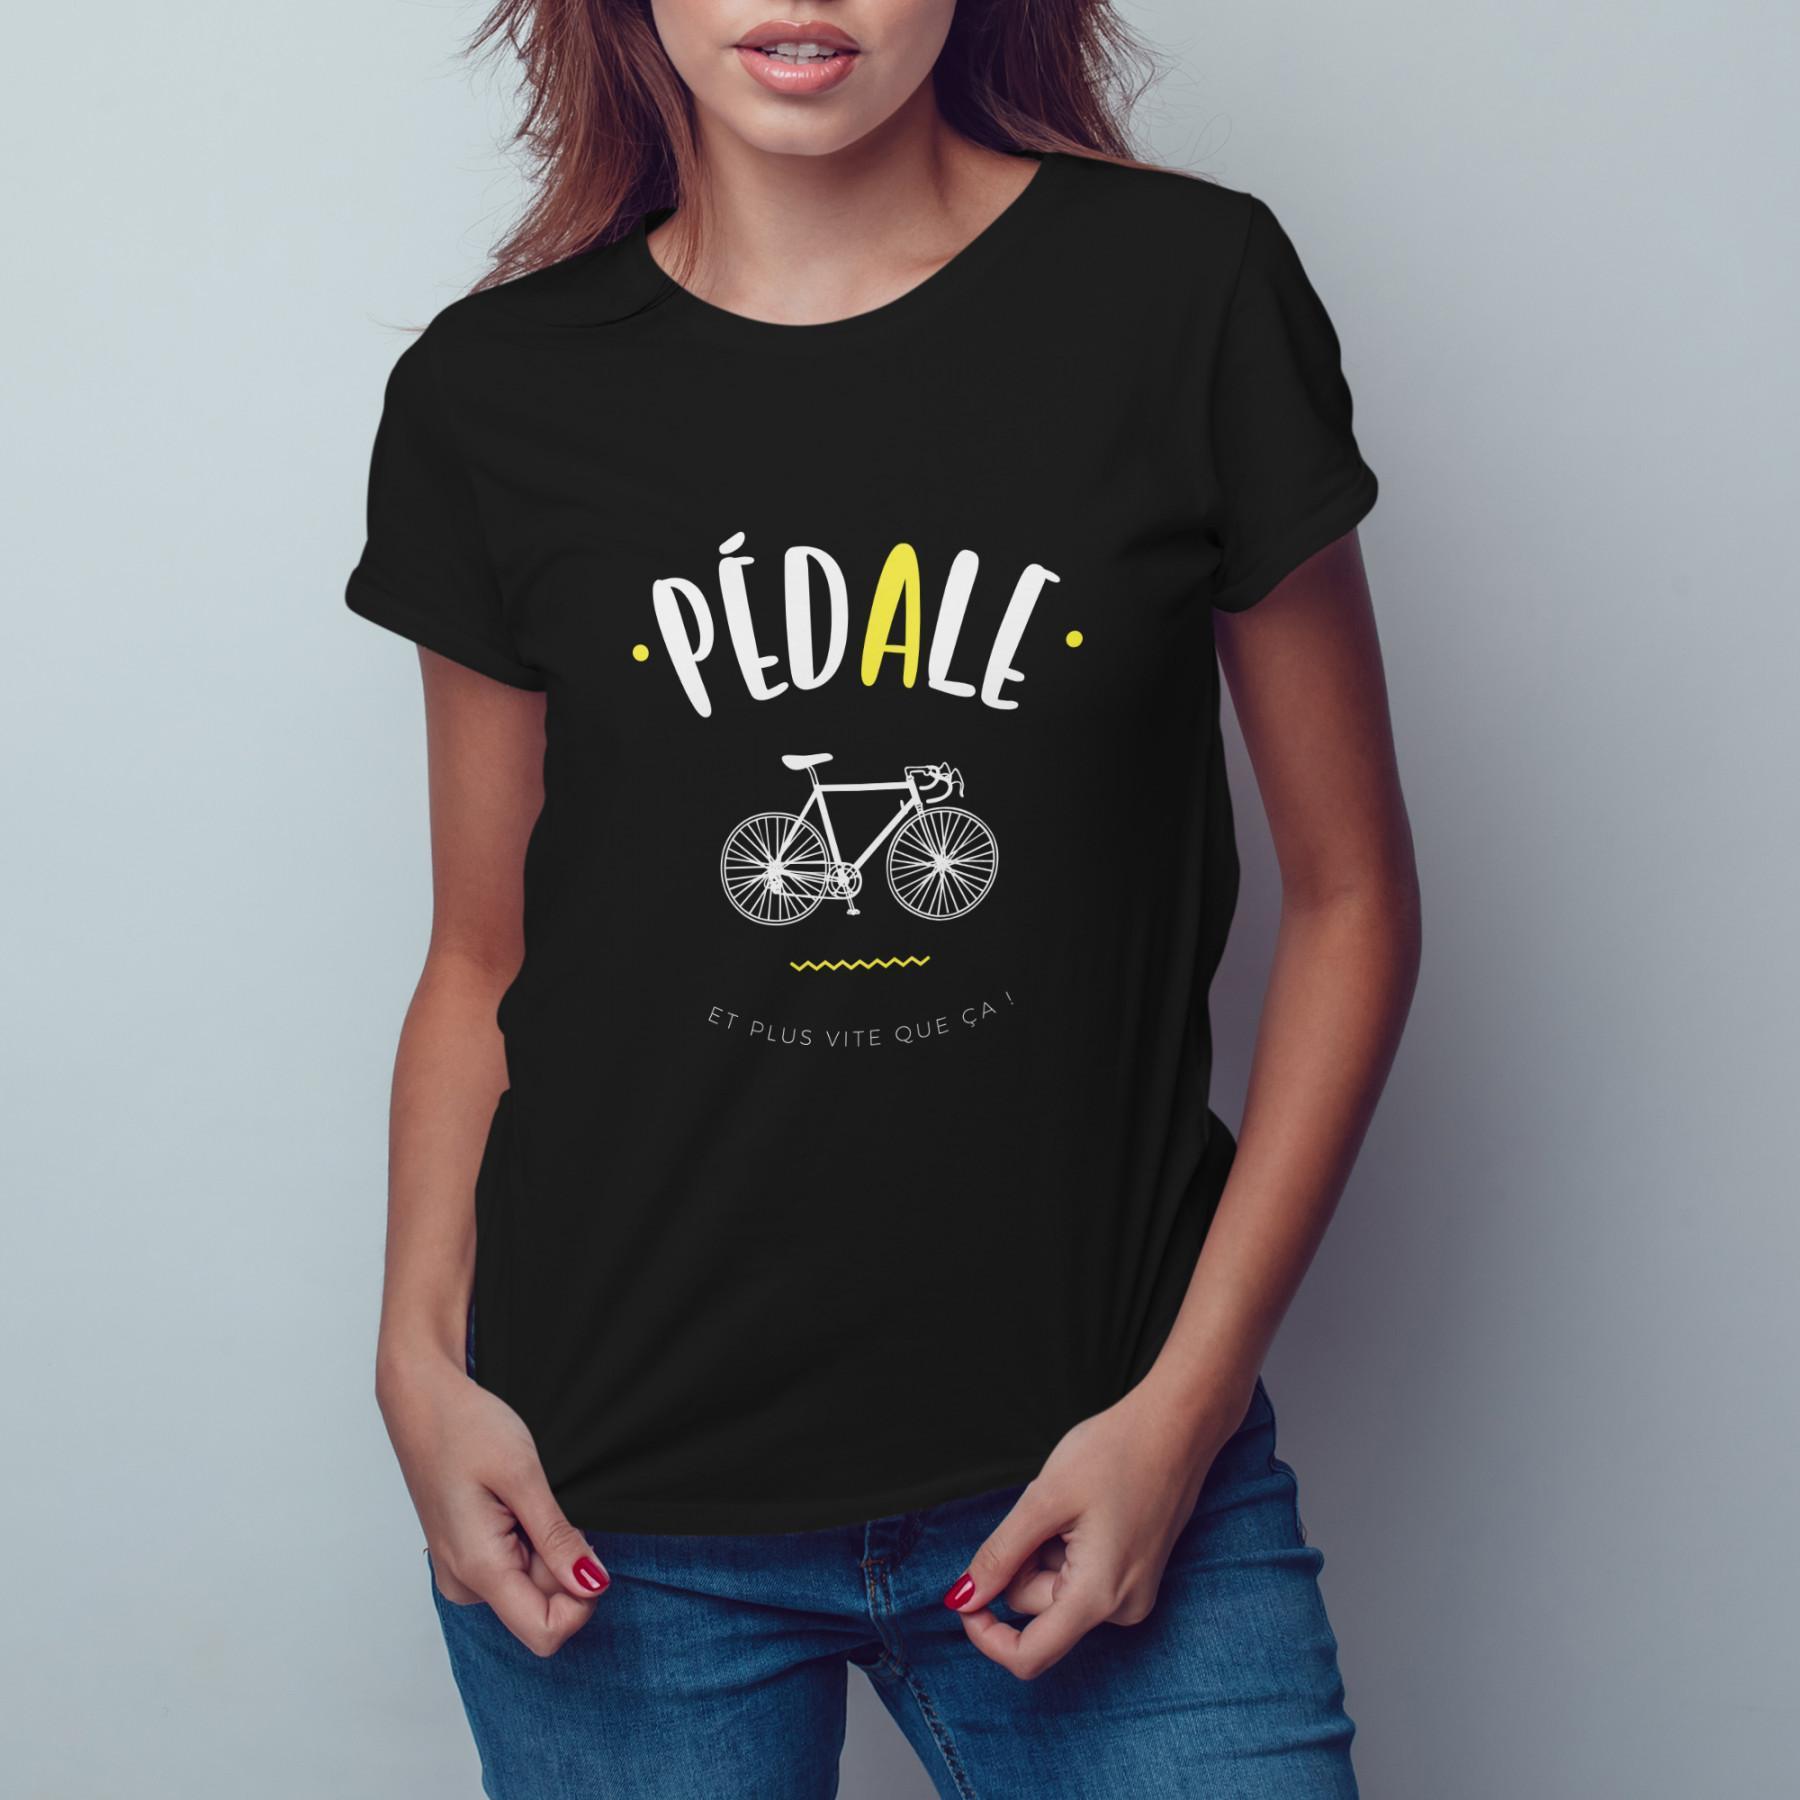 Camiseta mujer Pedal